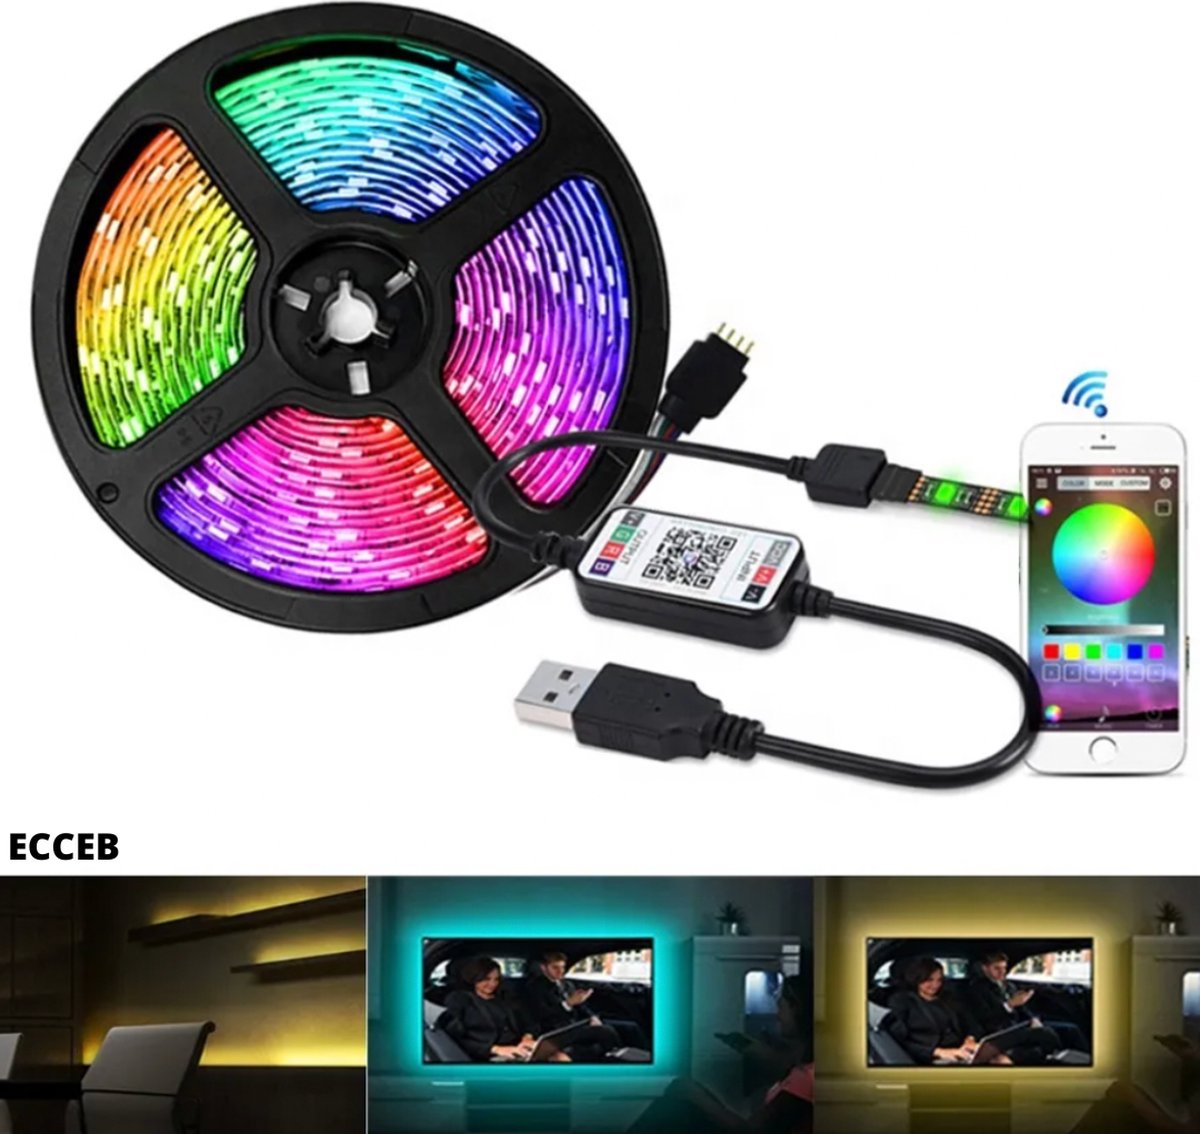 ECCEB - LED Strip - 2 x 1 Meter Rol - USB - Smartphone app - RGB - Dimbaar - Zelfklevend - 2 Meter